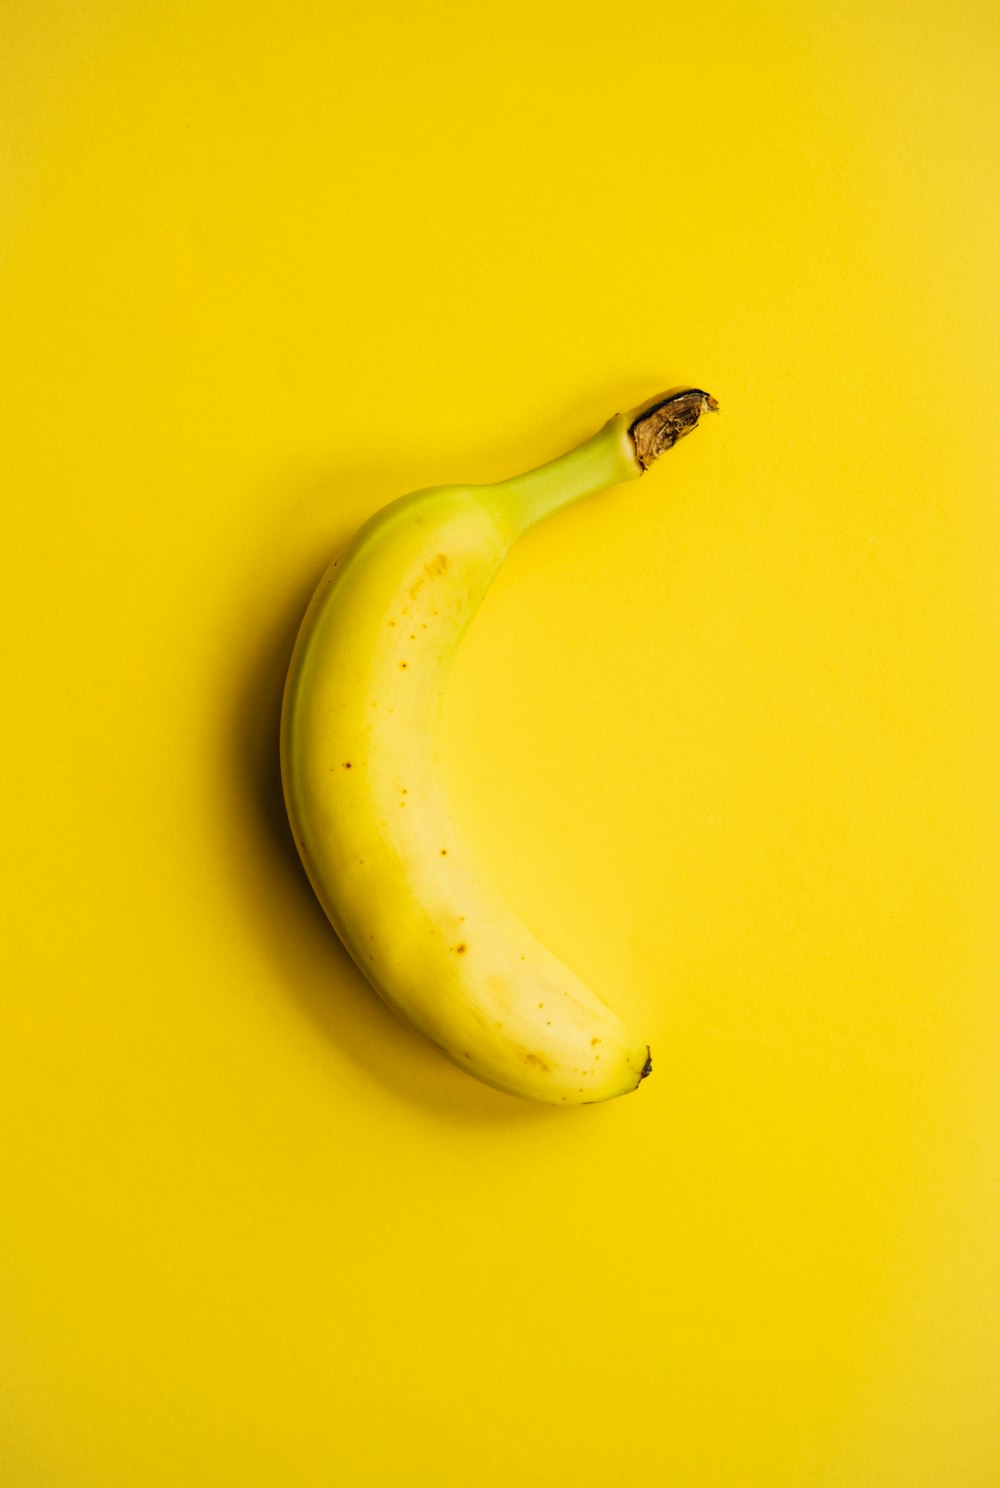 fruit de banane jaune sur surface jaune